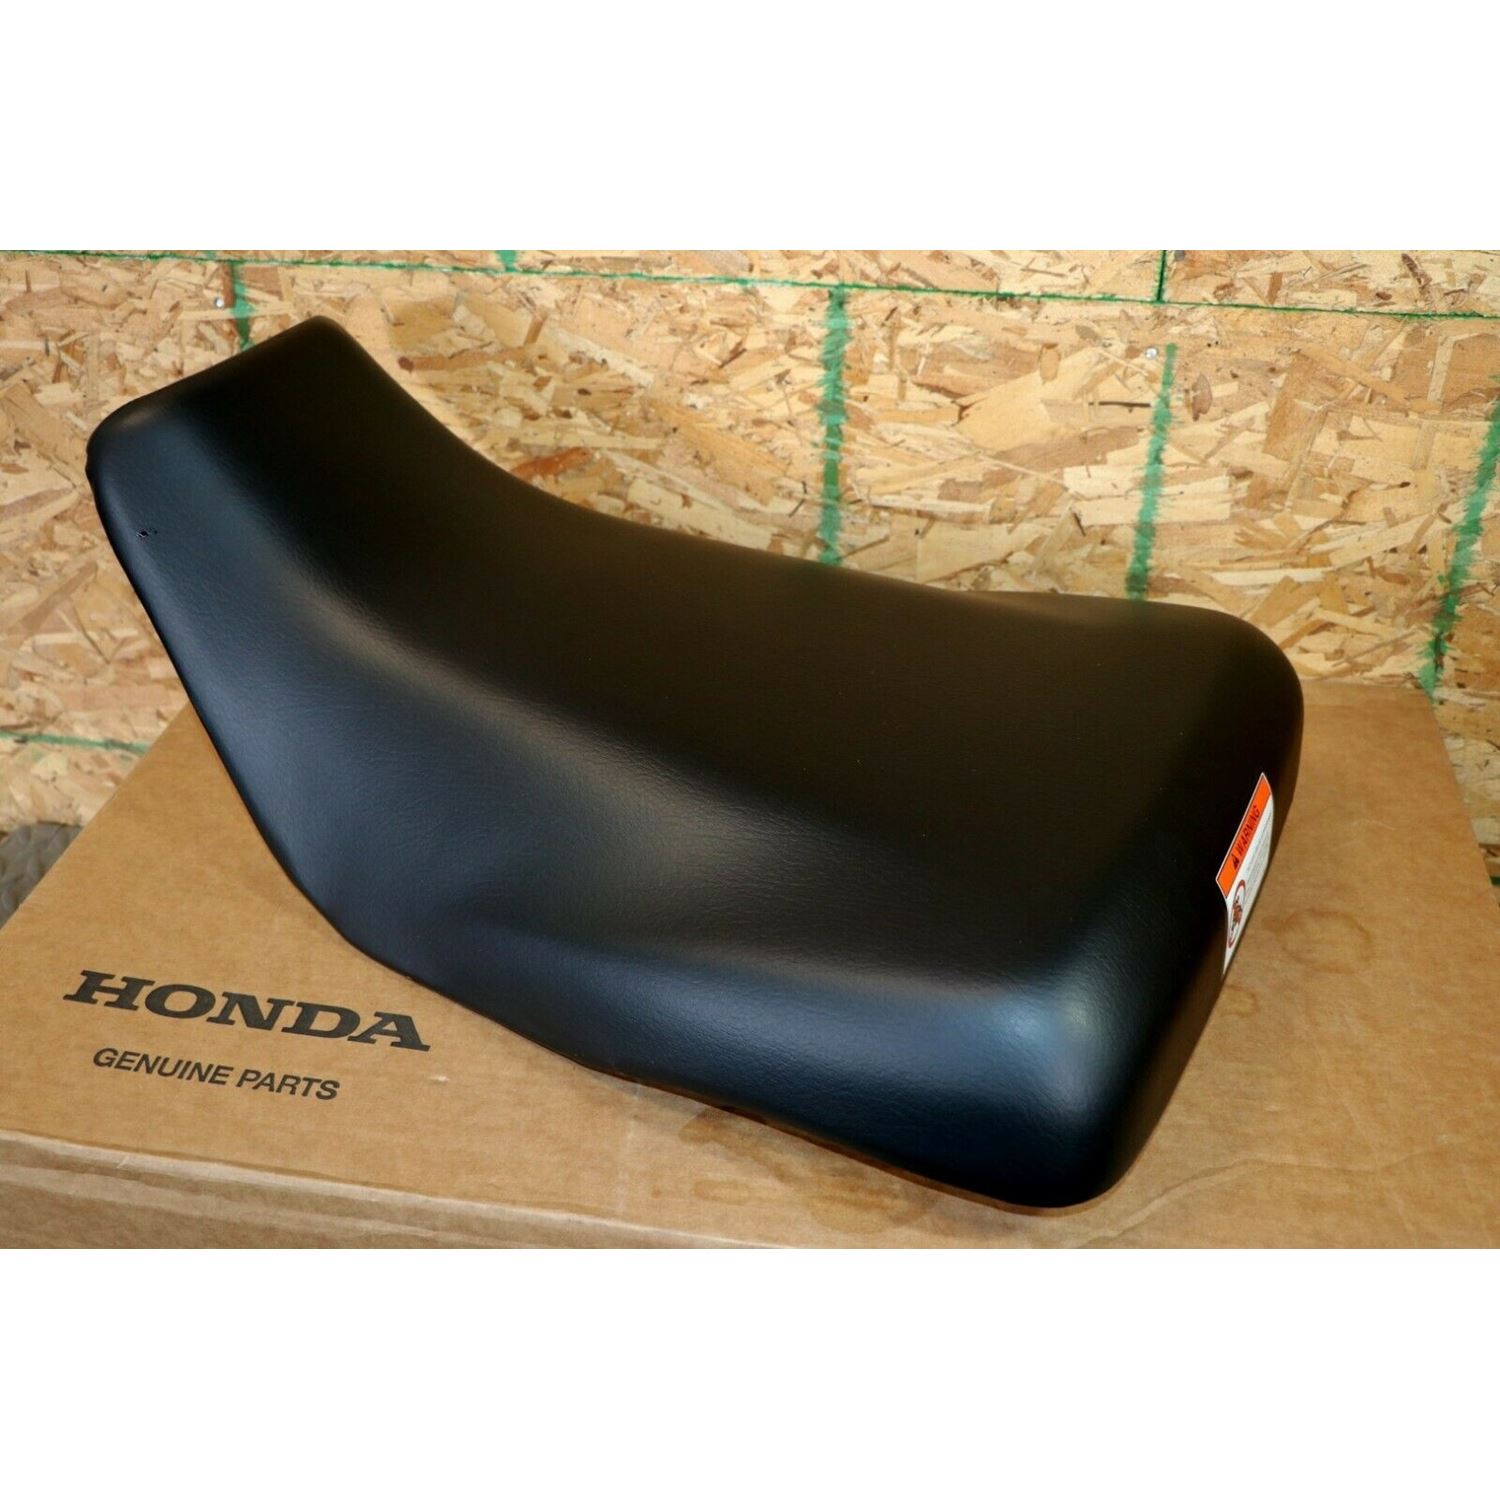 New OEM Complete Seat 2001-2004 Honda TRX 500 TRX5